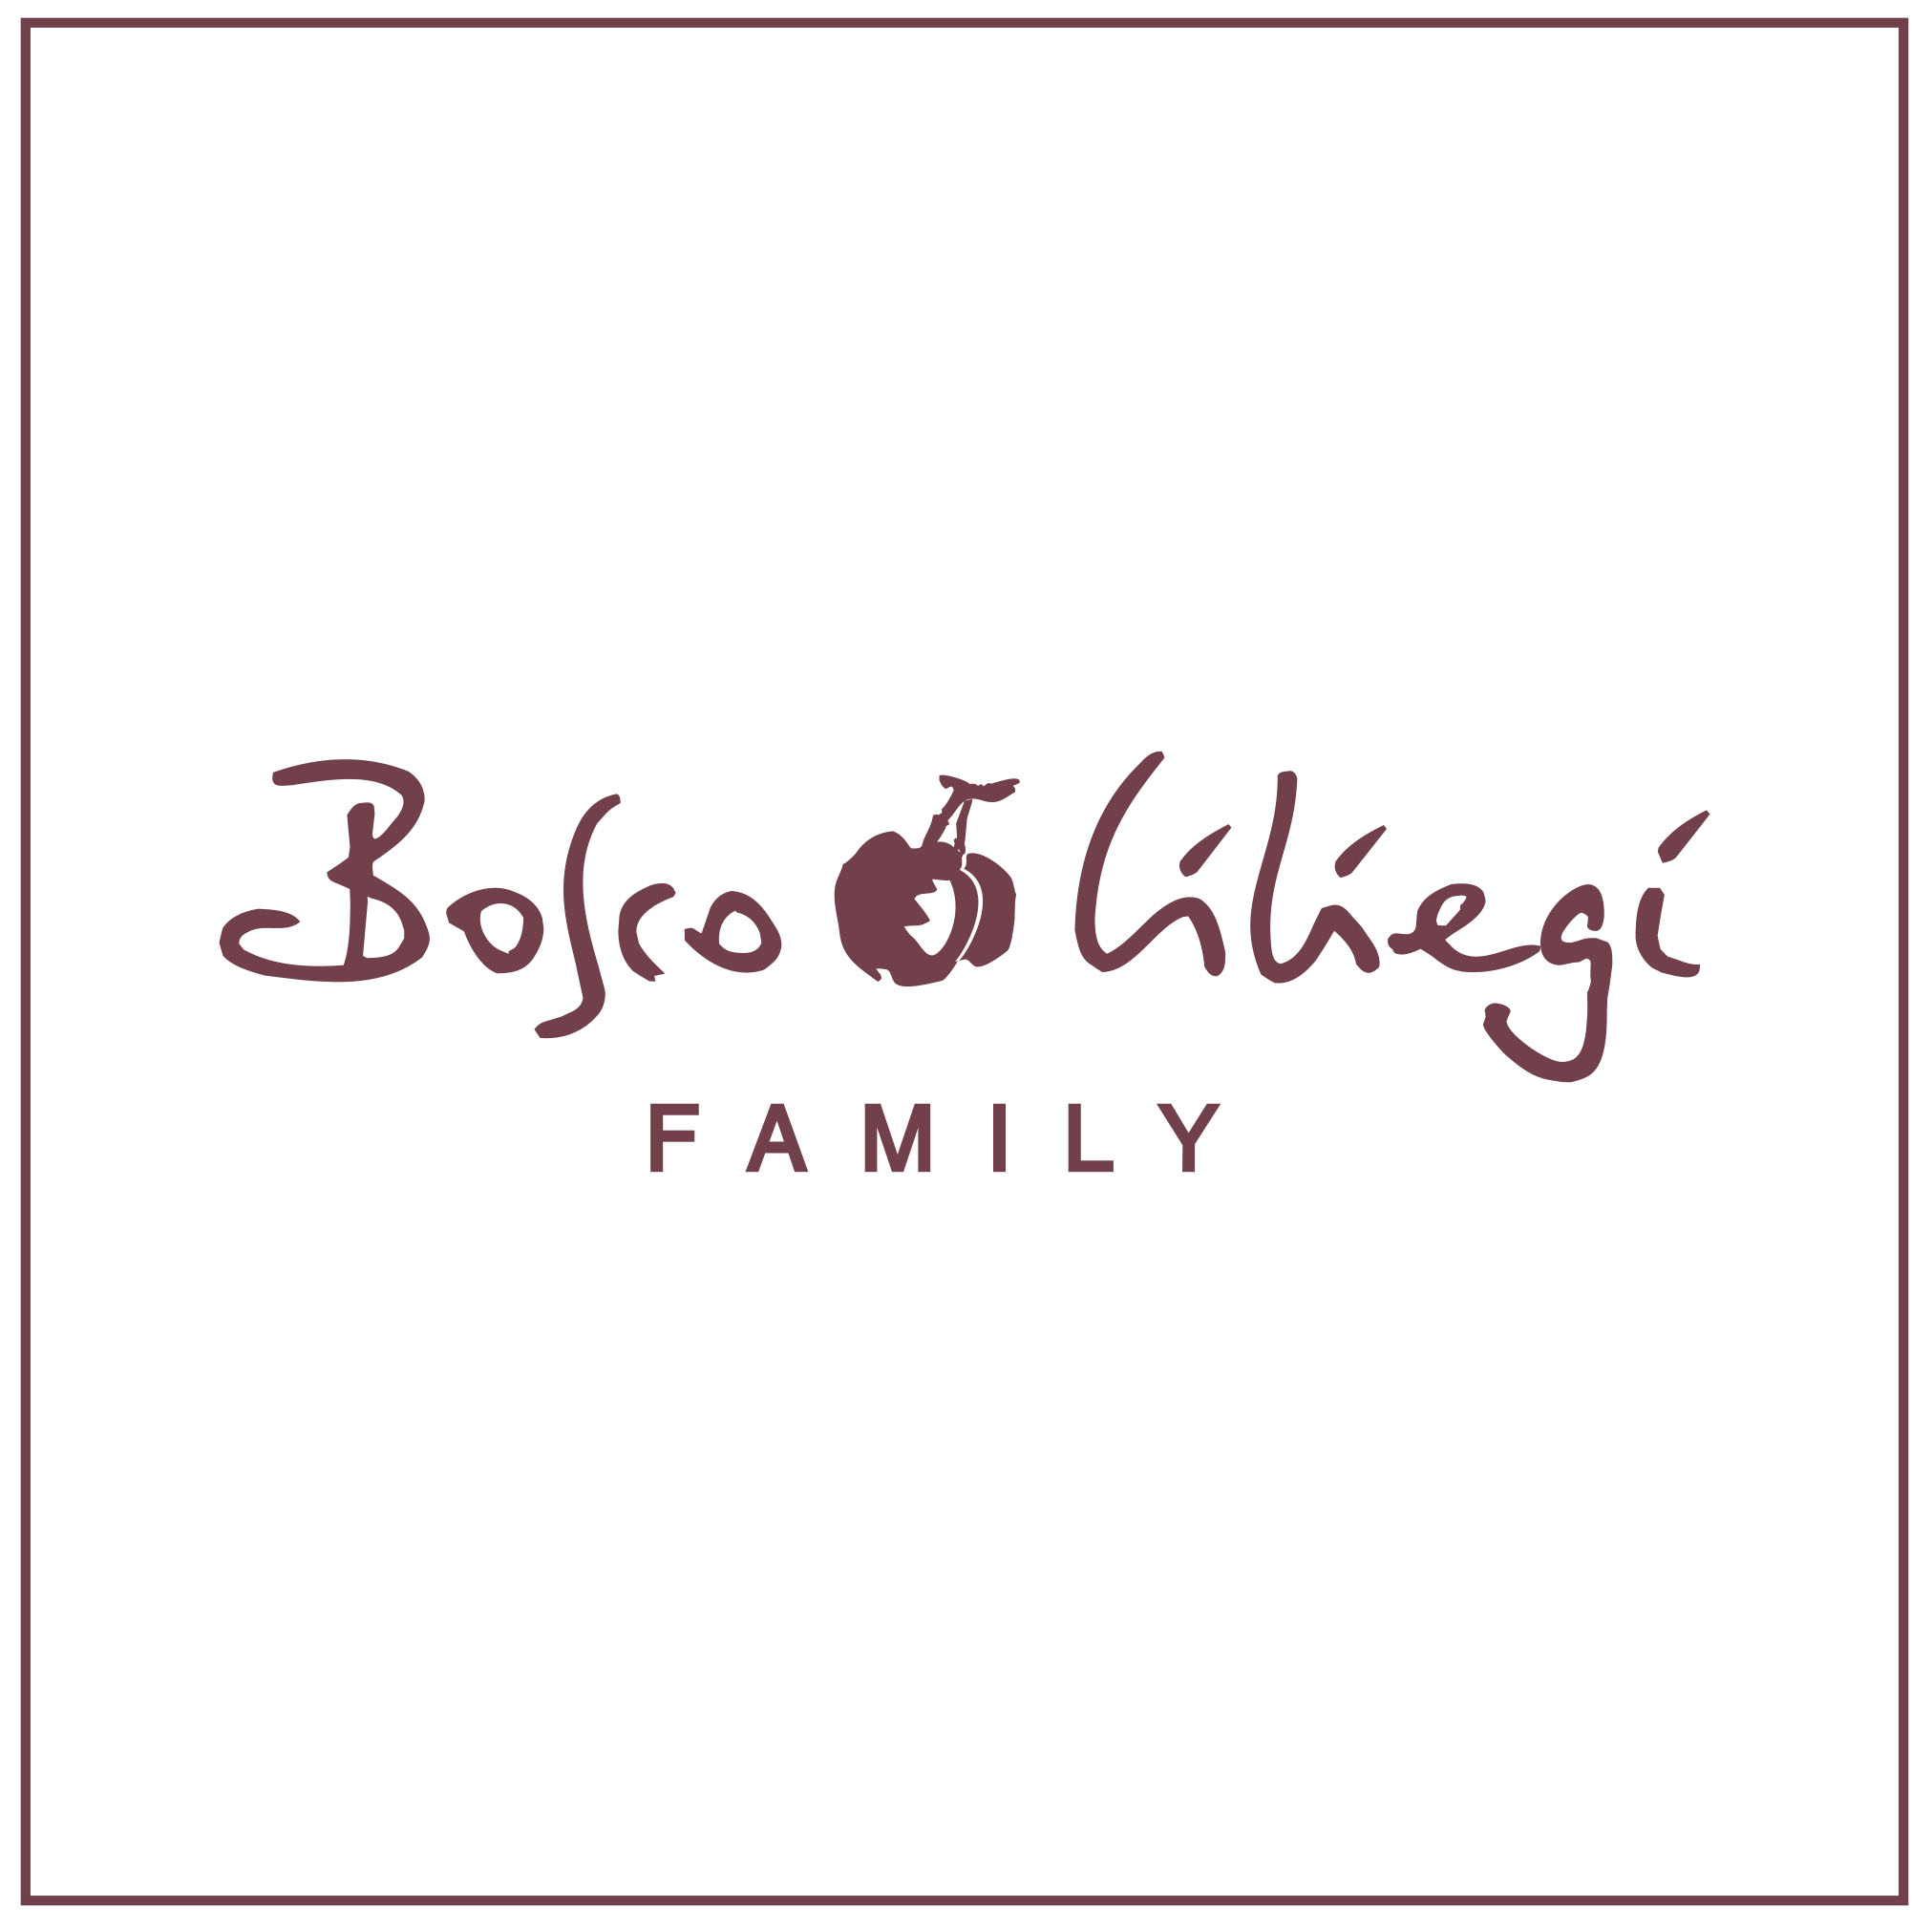 Боско ди чильеджи. Bosco di Ciliegi компания. Логотипboscodiciliegi. Bosco Family логотип. Боско ди Чильеджи лого.